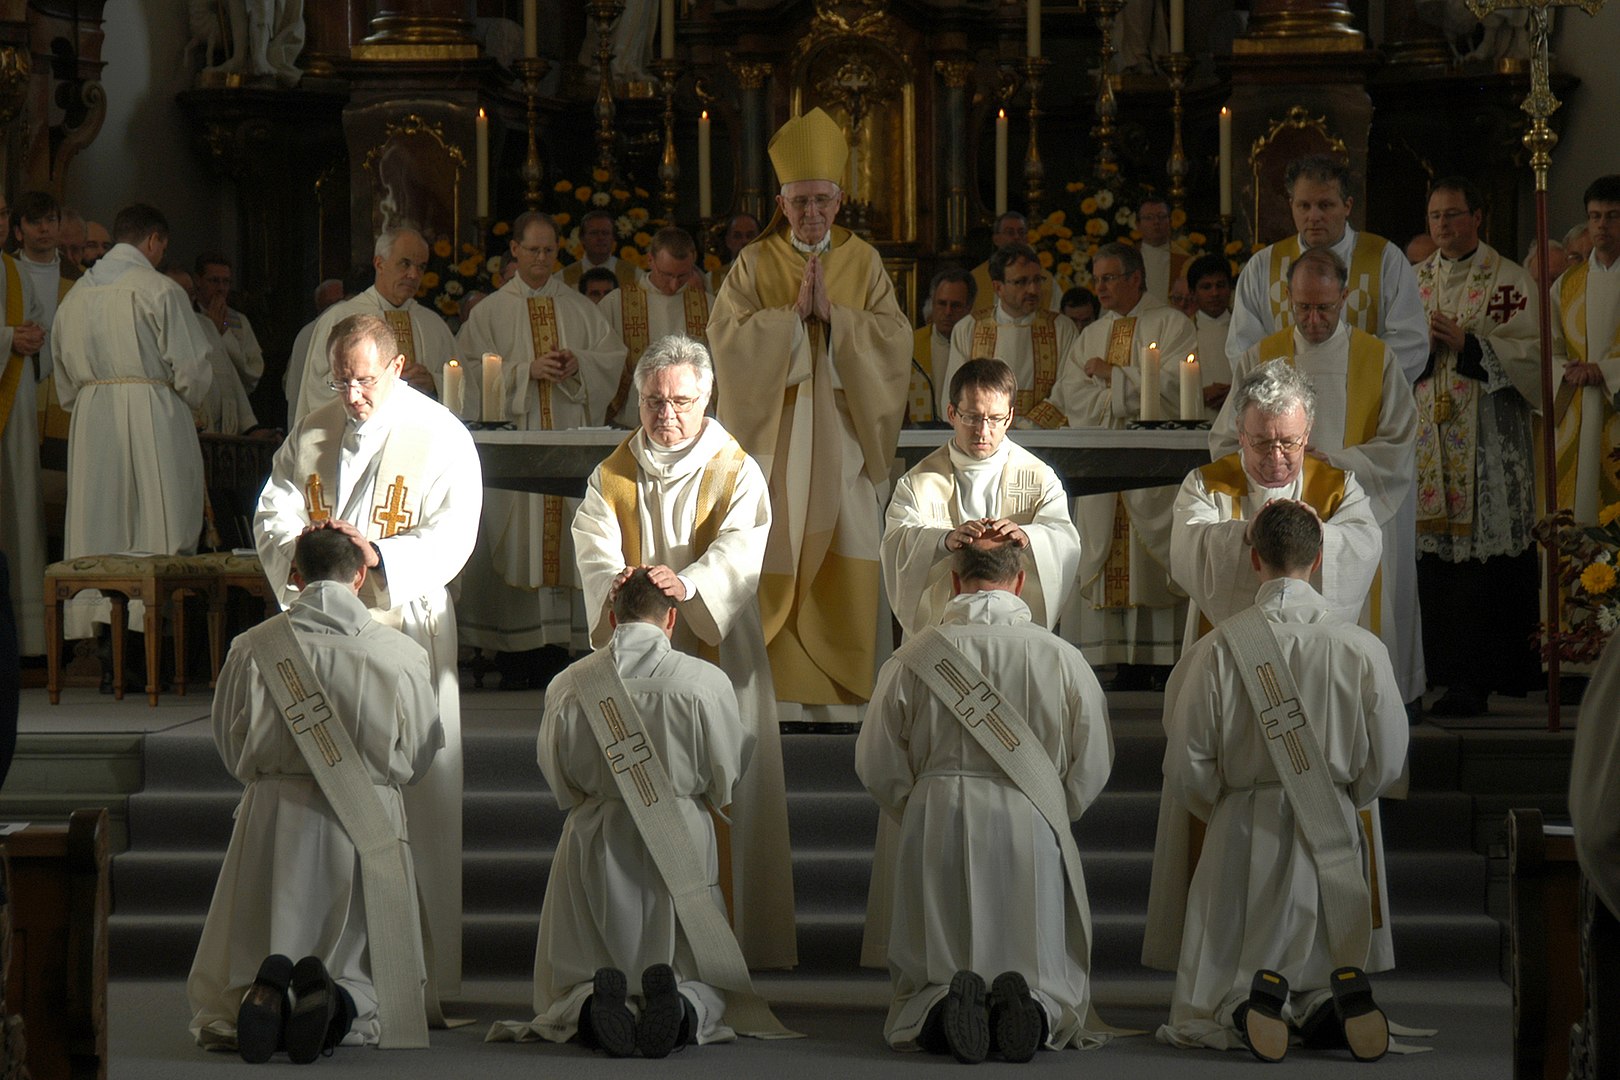 origins of celibacy in the catholic church